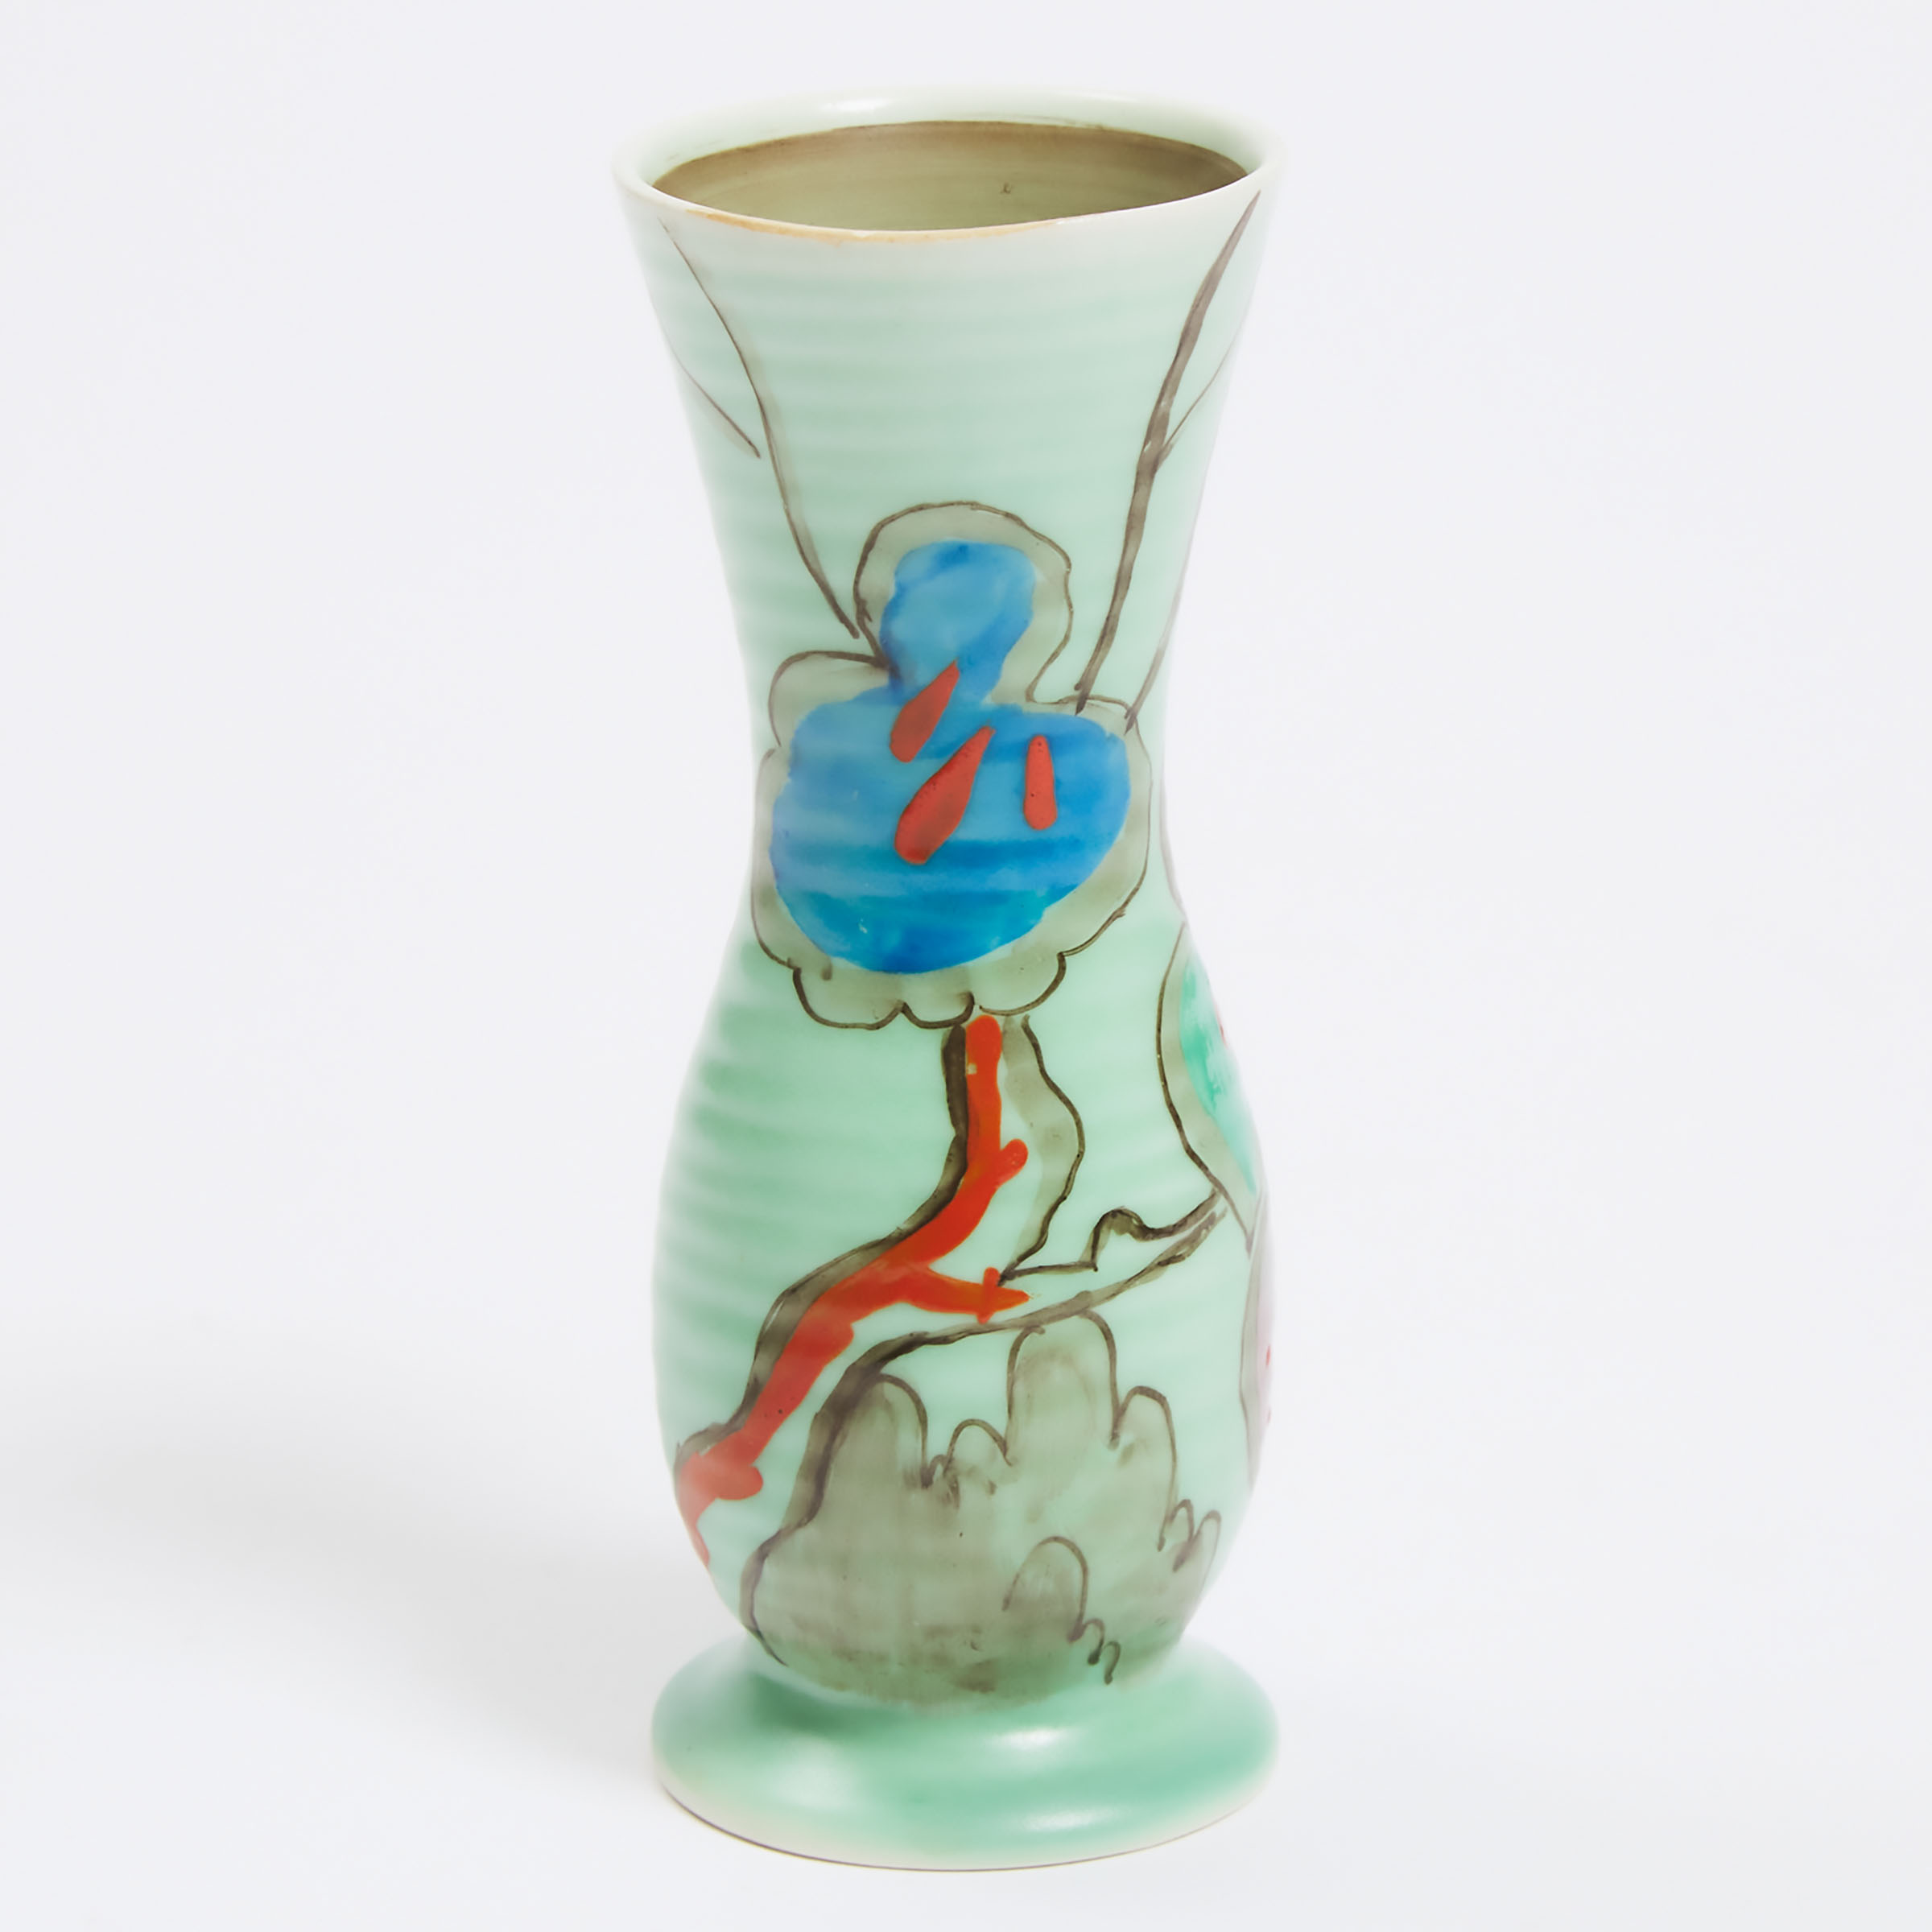 Clarice Cliff Small Vase, for Wilkinson, c.1930